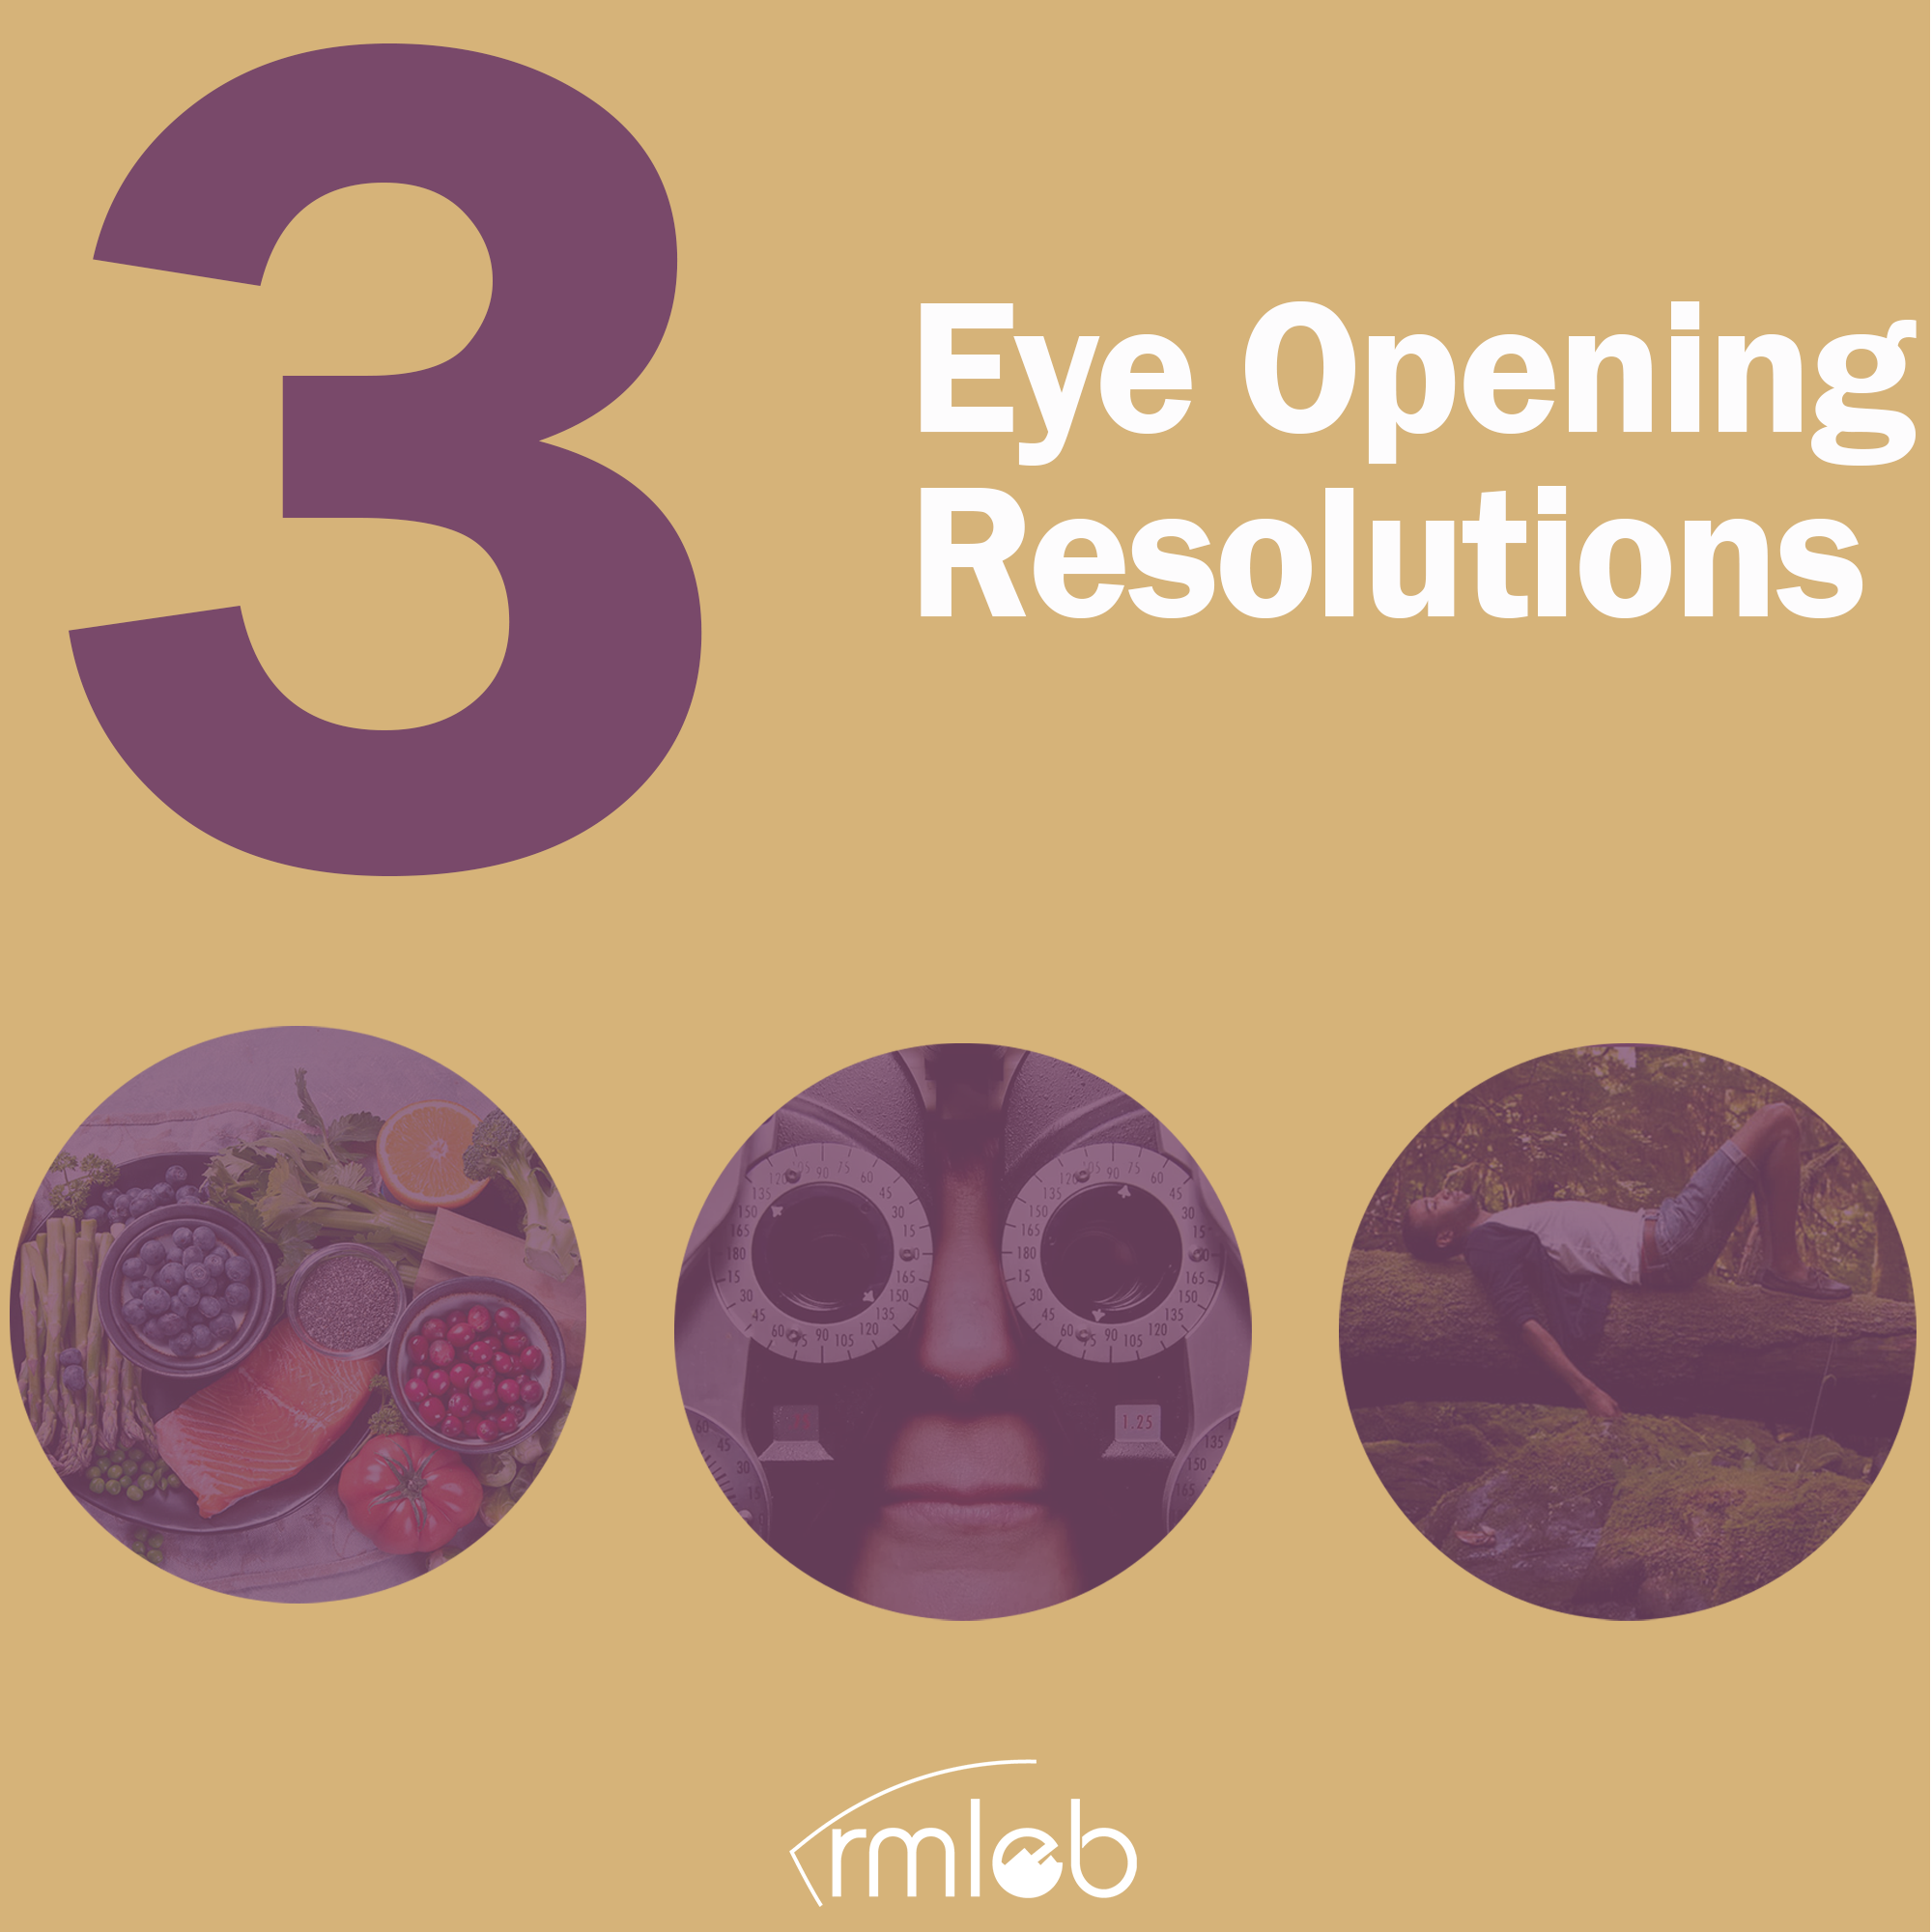 
Eye Opening Resolutions